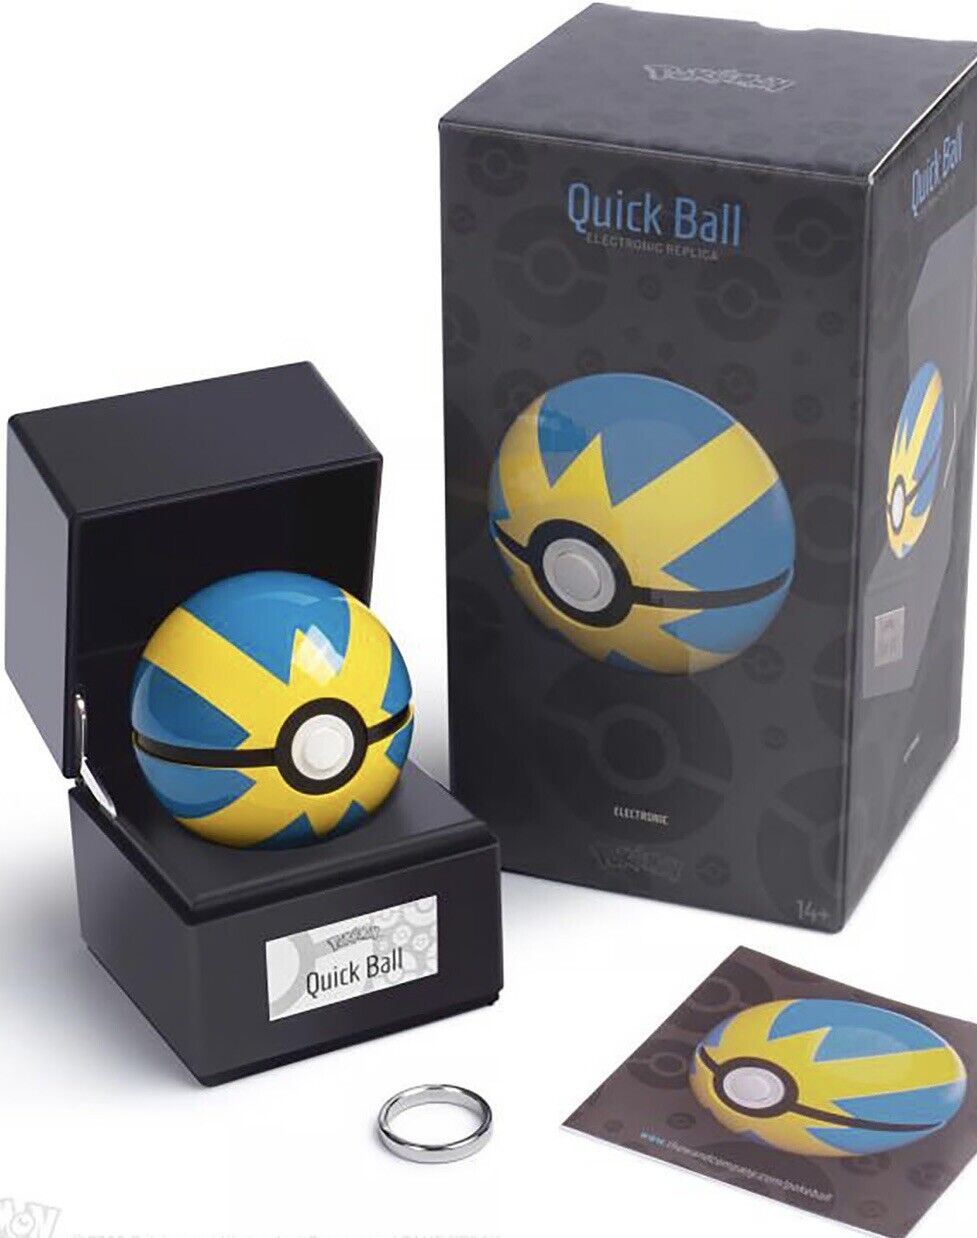 Pokémon Quick Ball Poke ball The Wand Company Collectible 